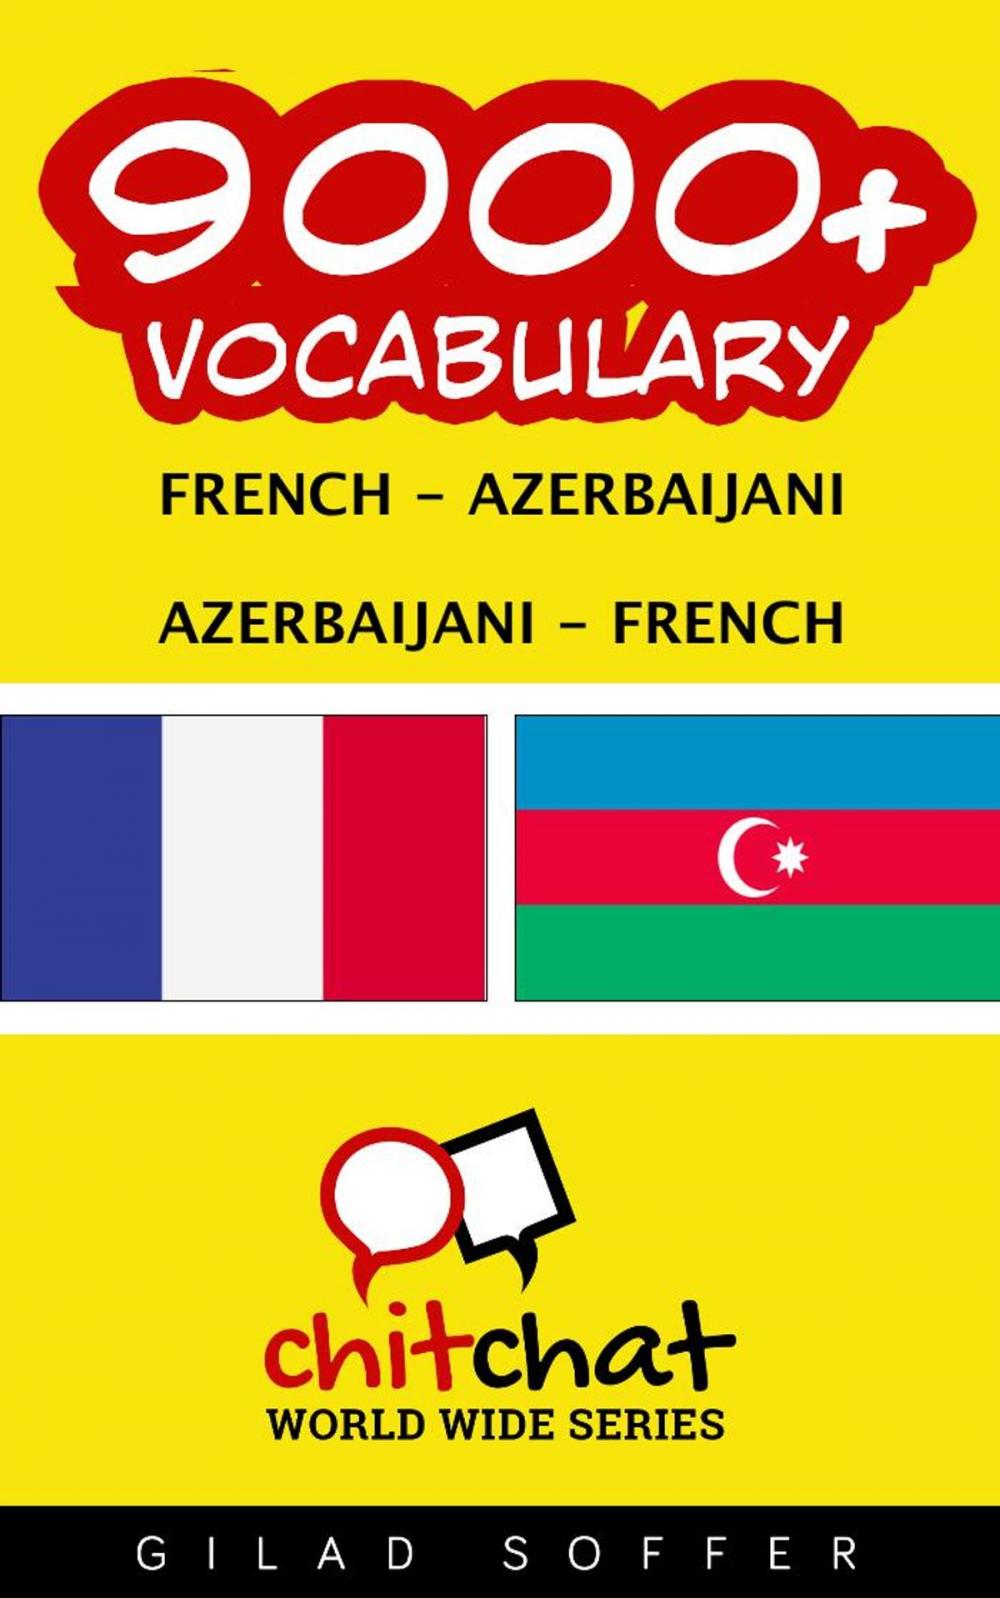 Big bigCover of 9000+ Vocabulary French - Azerbaijani